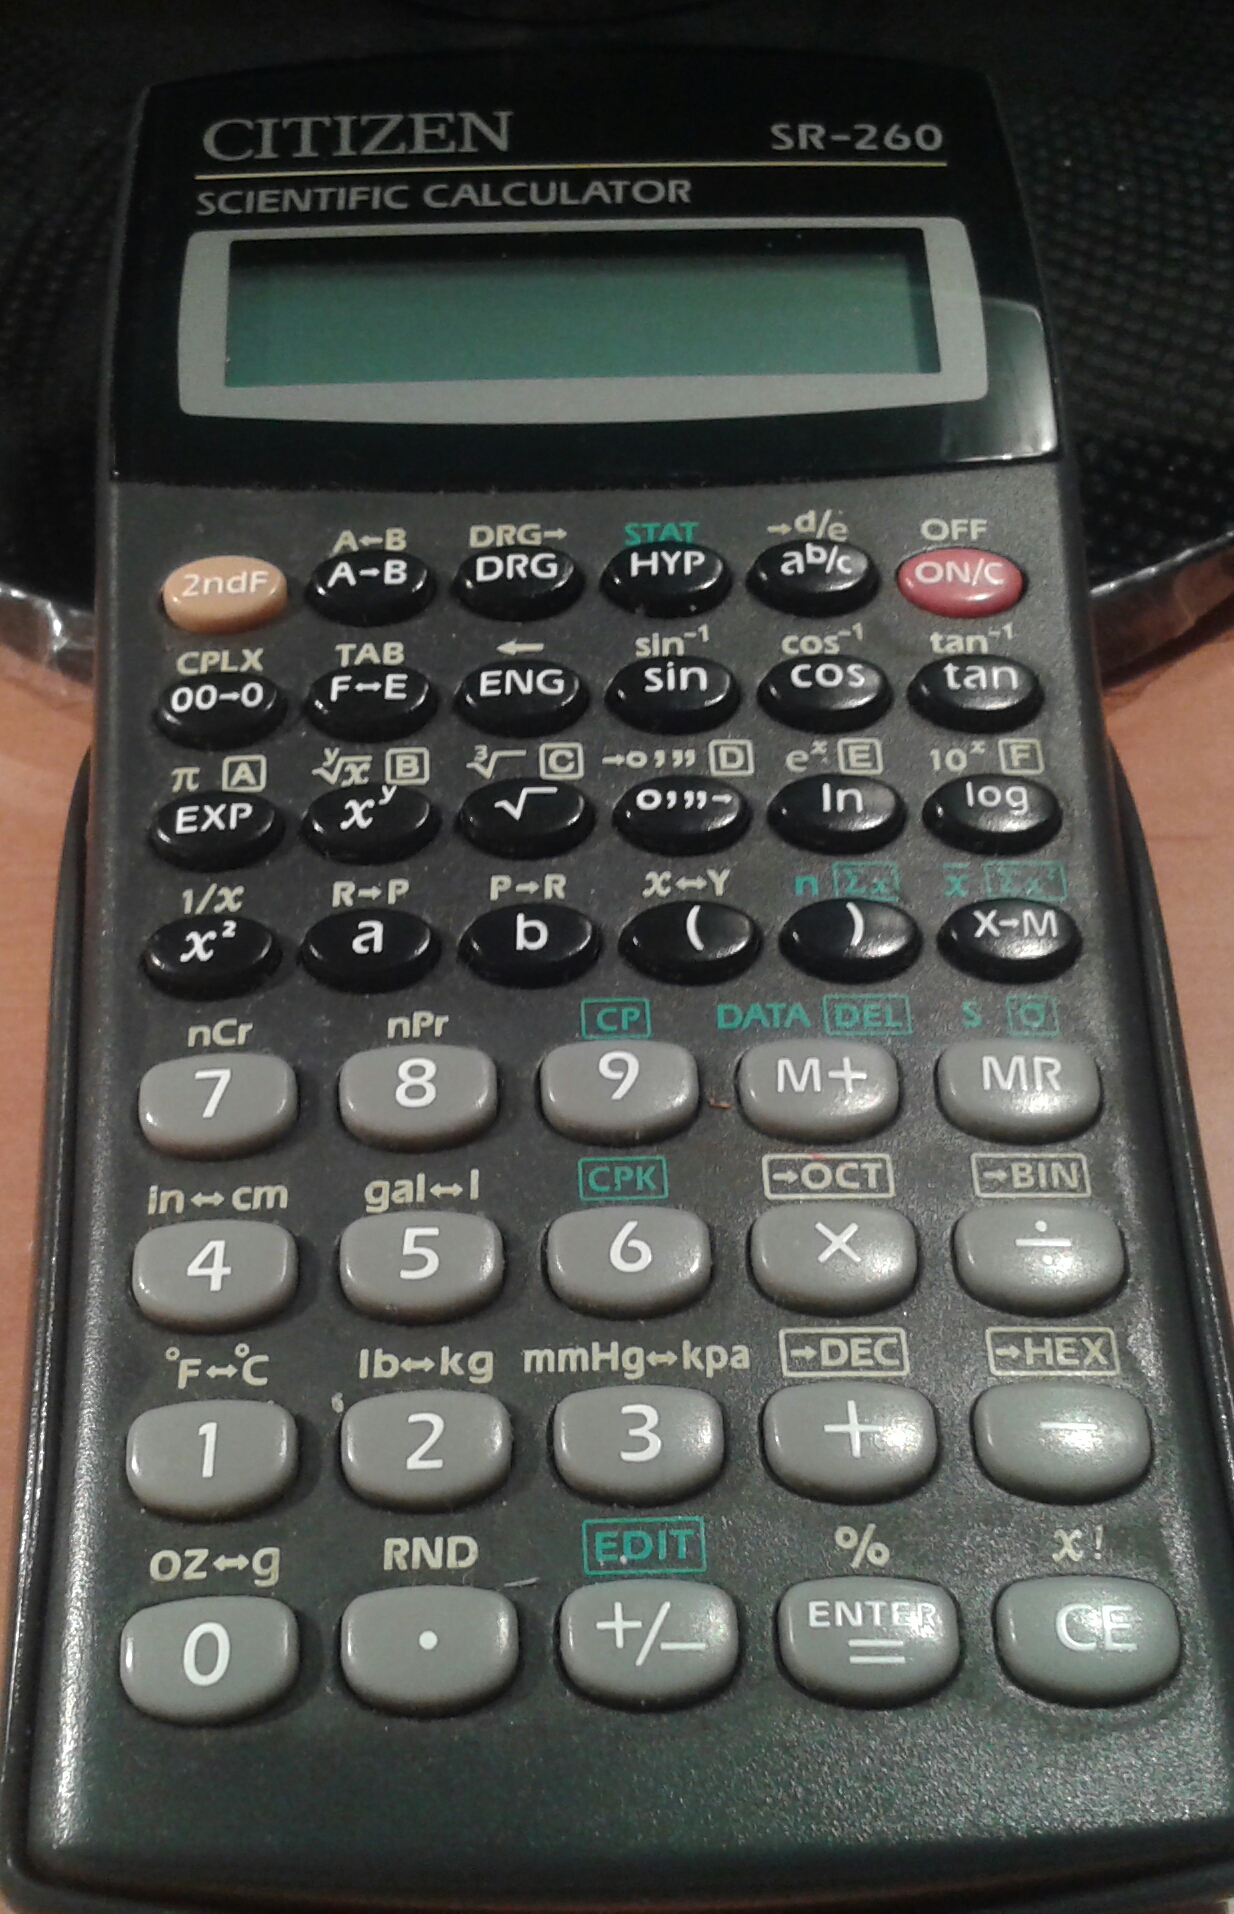 Latón Tentación Cuota de admisión Como usar la calculadora en trigonometría | Que no te aburran las M@TES